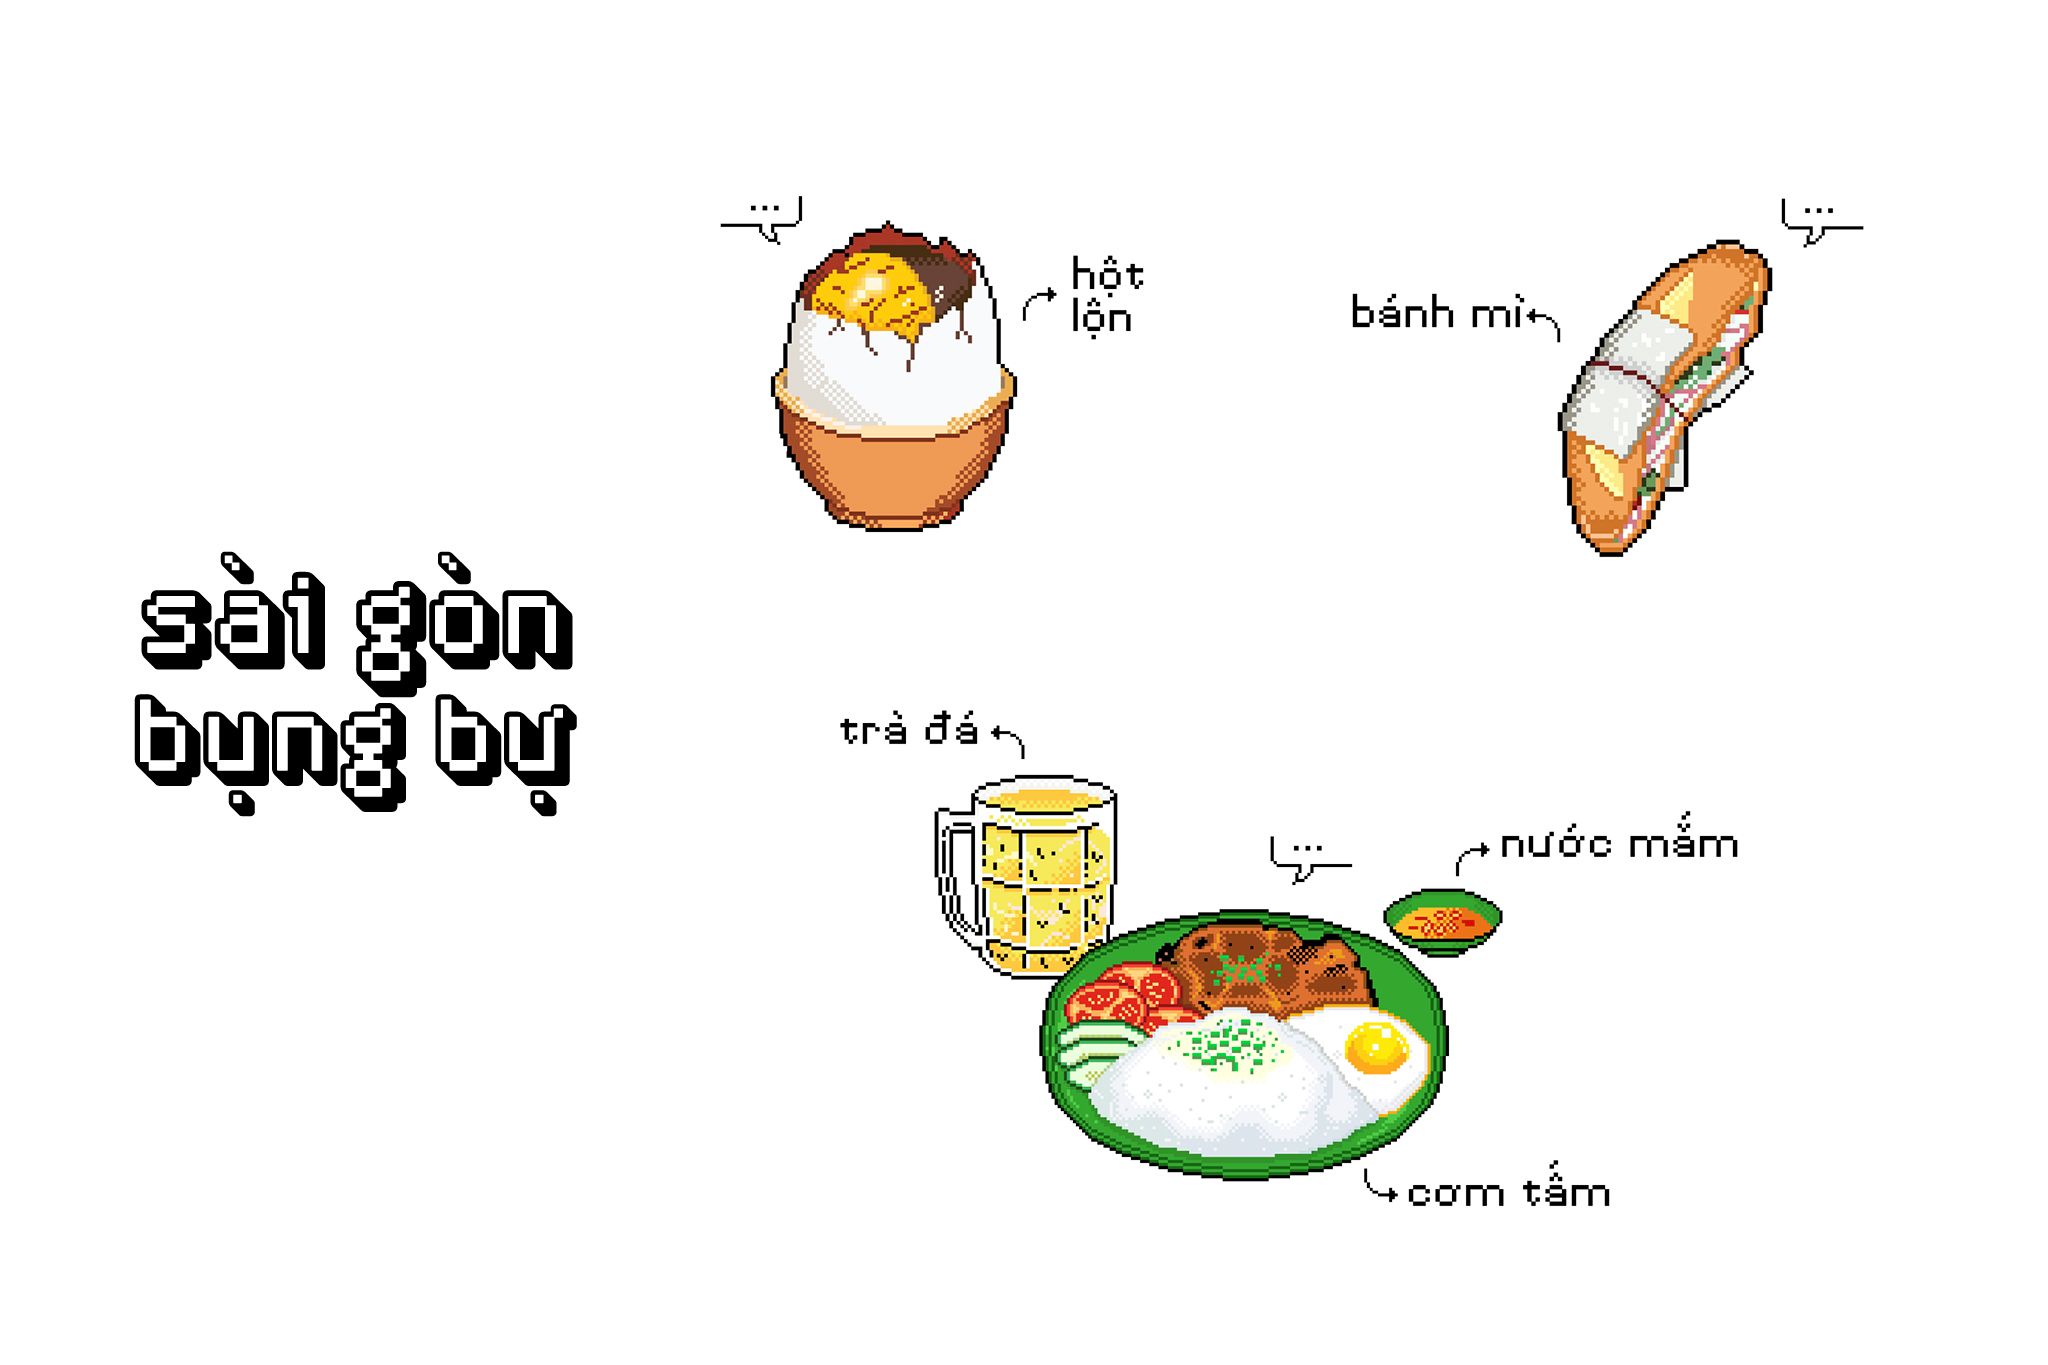 [Illustrations] Your Favorite Saigon Street Snacks as Seen in Pixel Art ...